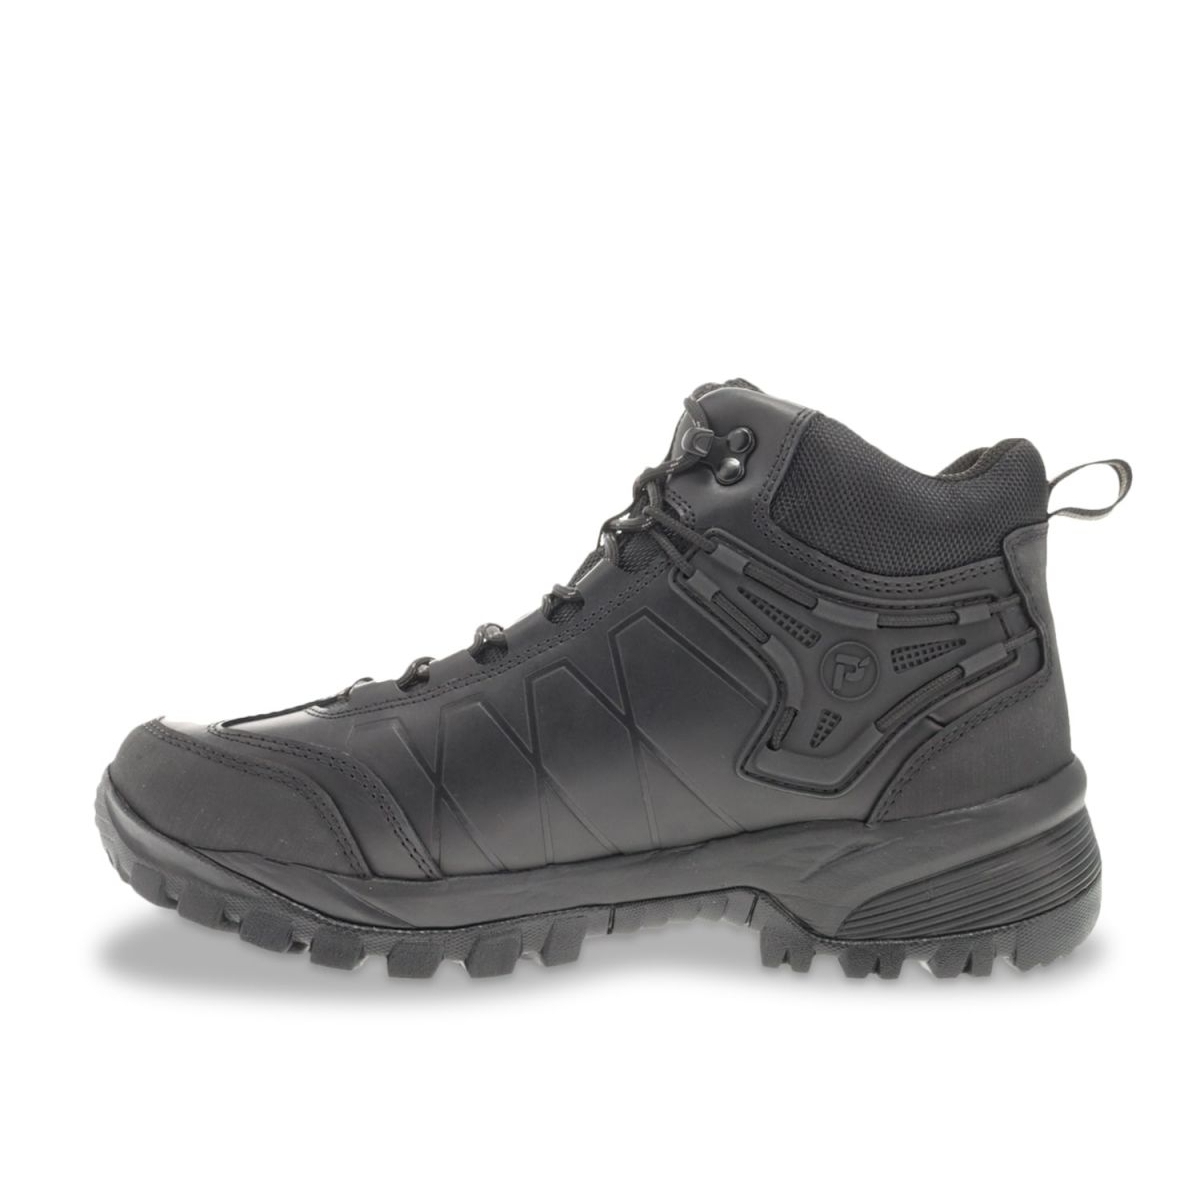 Propet Men's Ridge Walker Force Hiking Boots Black - MBA052LBLK BLACK - BLACK, 8 X-Wide